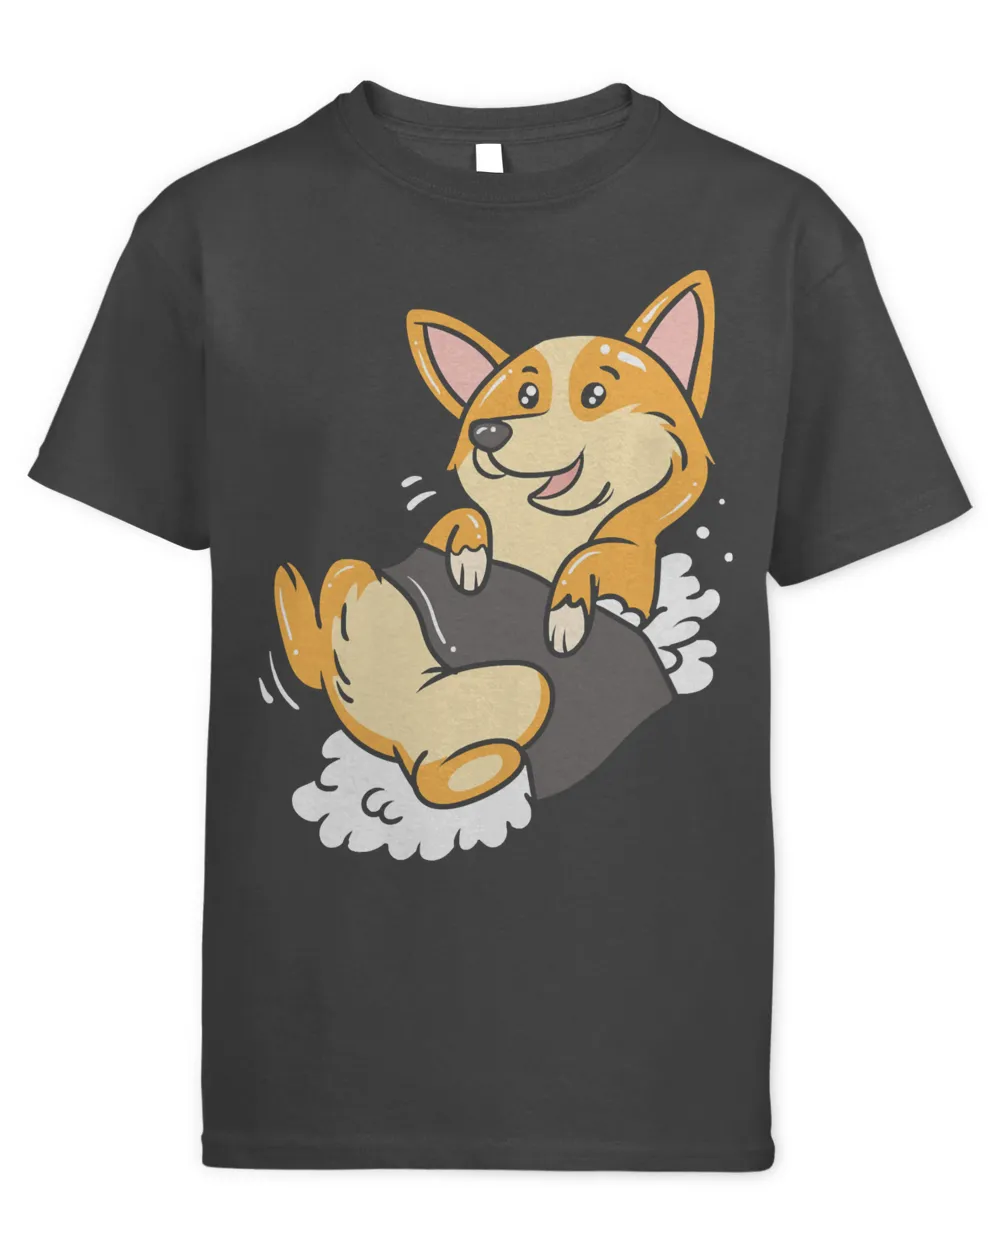 Dog Akita Sushi Funny DogT Shirt 462 paws